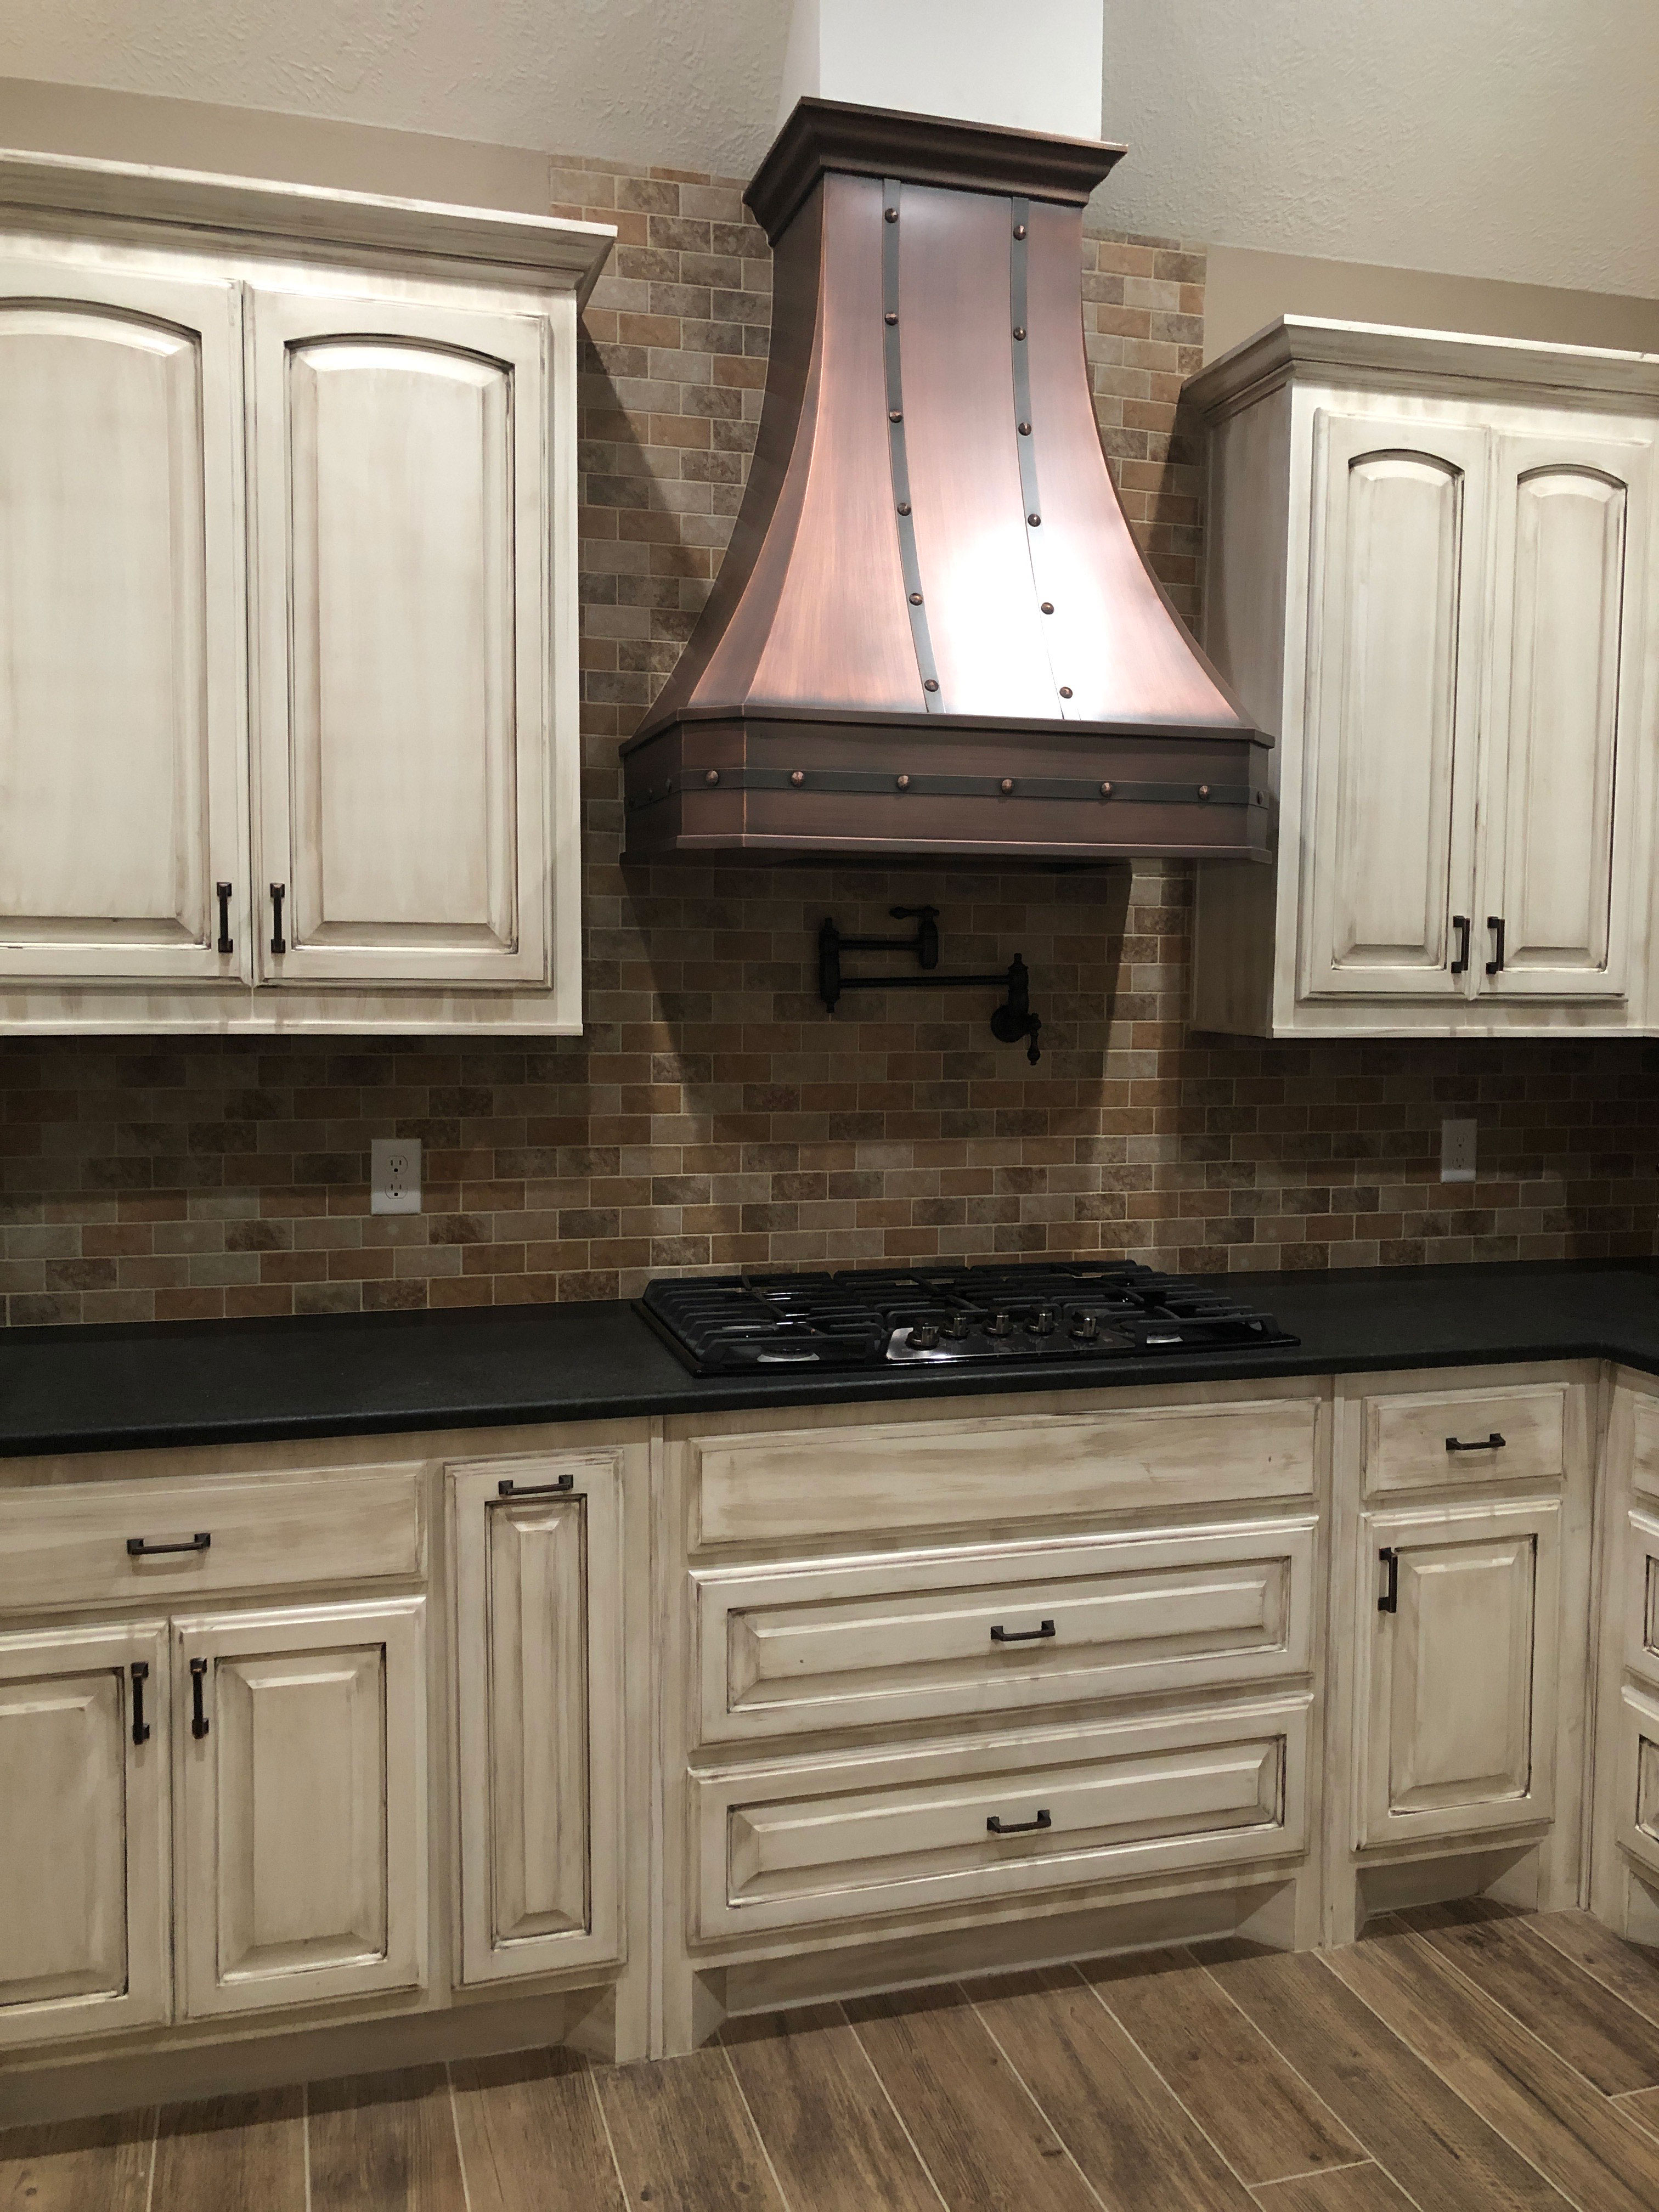 French kitchen design with white cabinets, stylish grey kitchen countertops, captivating brick backsplash with range hood